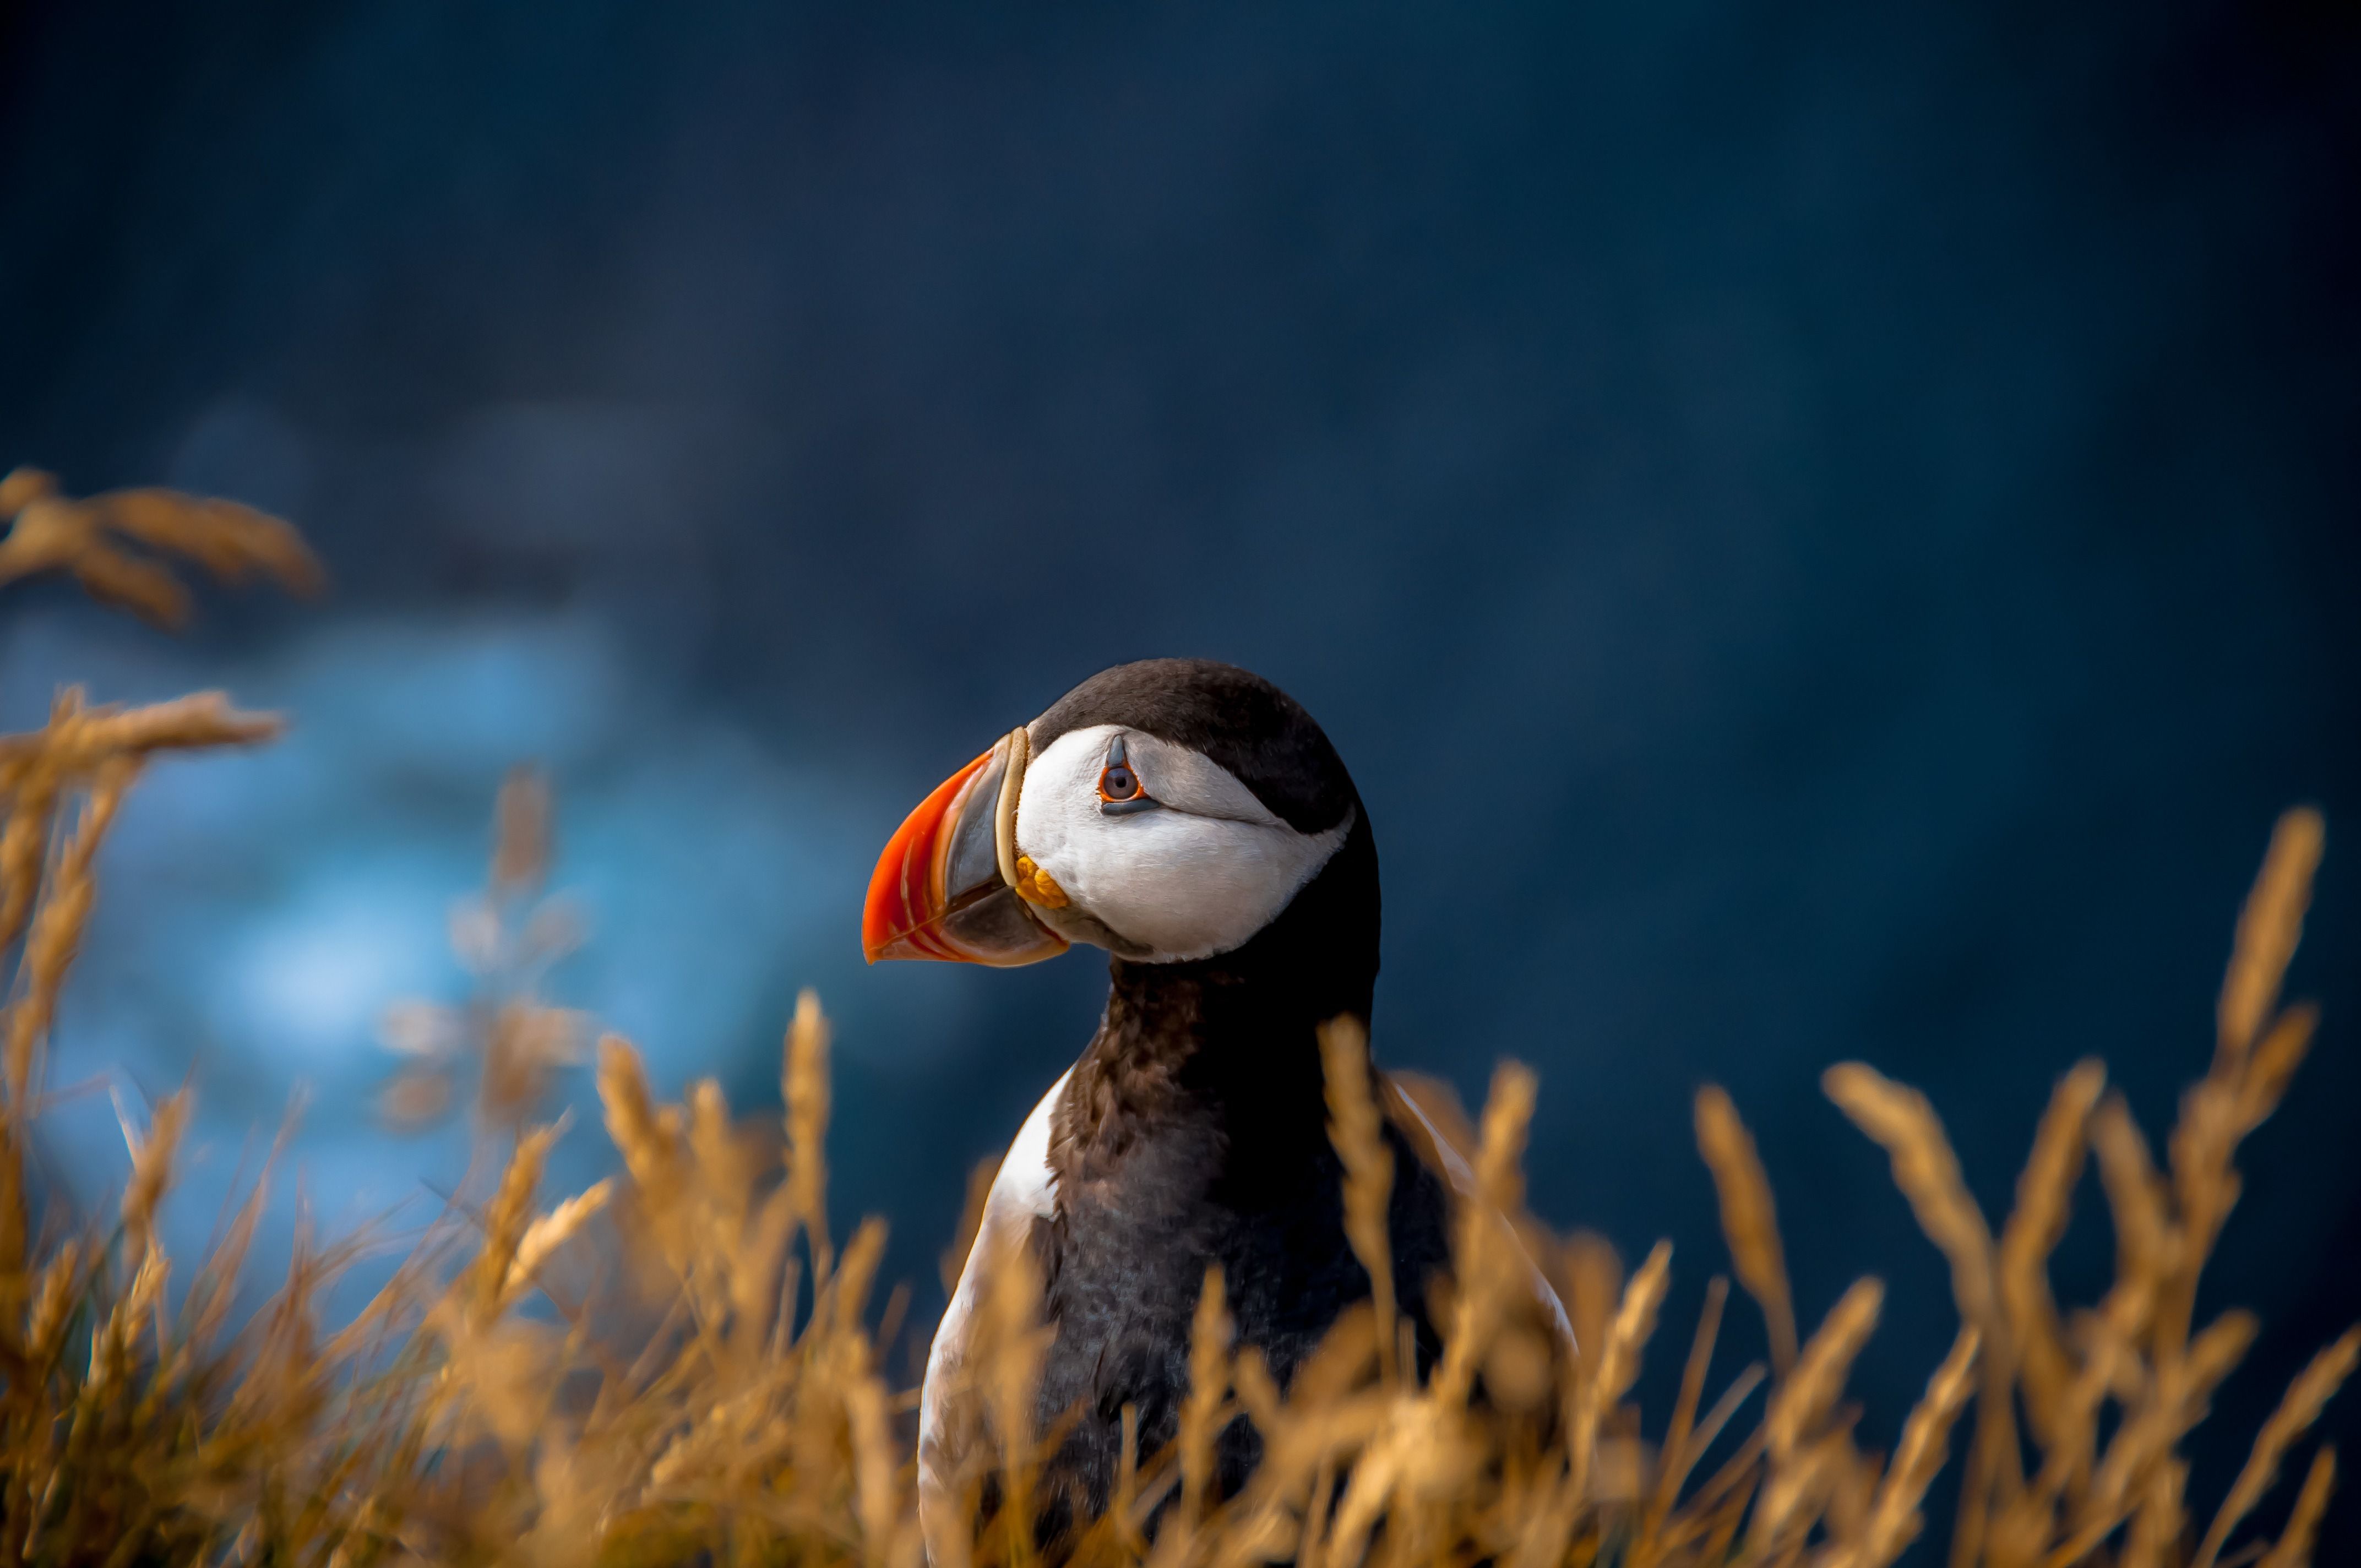 Puffin Photograph by Chris Zielecki - National Geographic Your Shot. Puffins bird, Animals, Animals wild